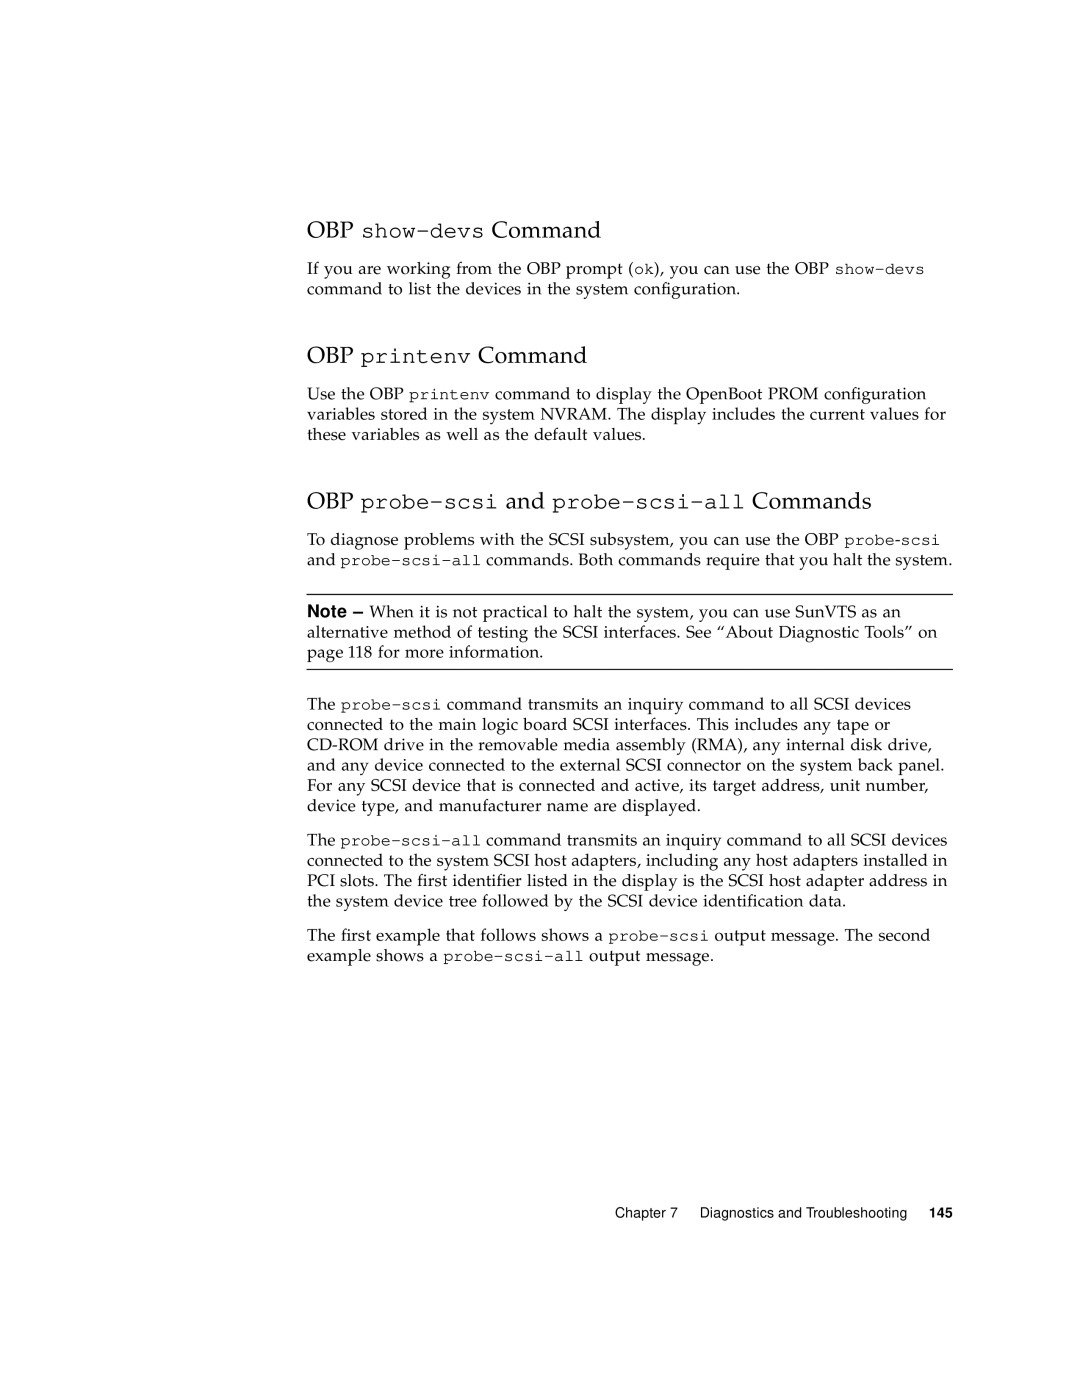 Sun Microsystems 220R manual OBP show-devs Command, OBP printenv Command, OBP probe-scsi and probe-scsi-all Commands 